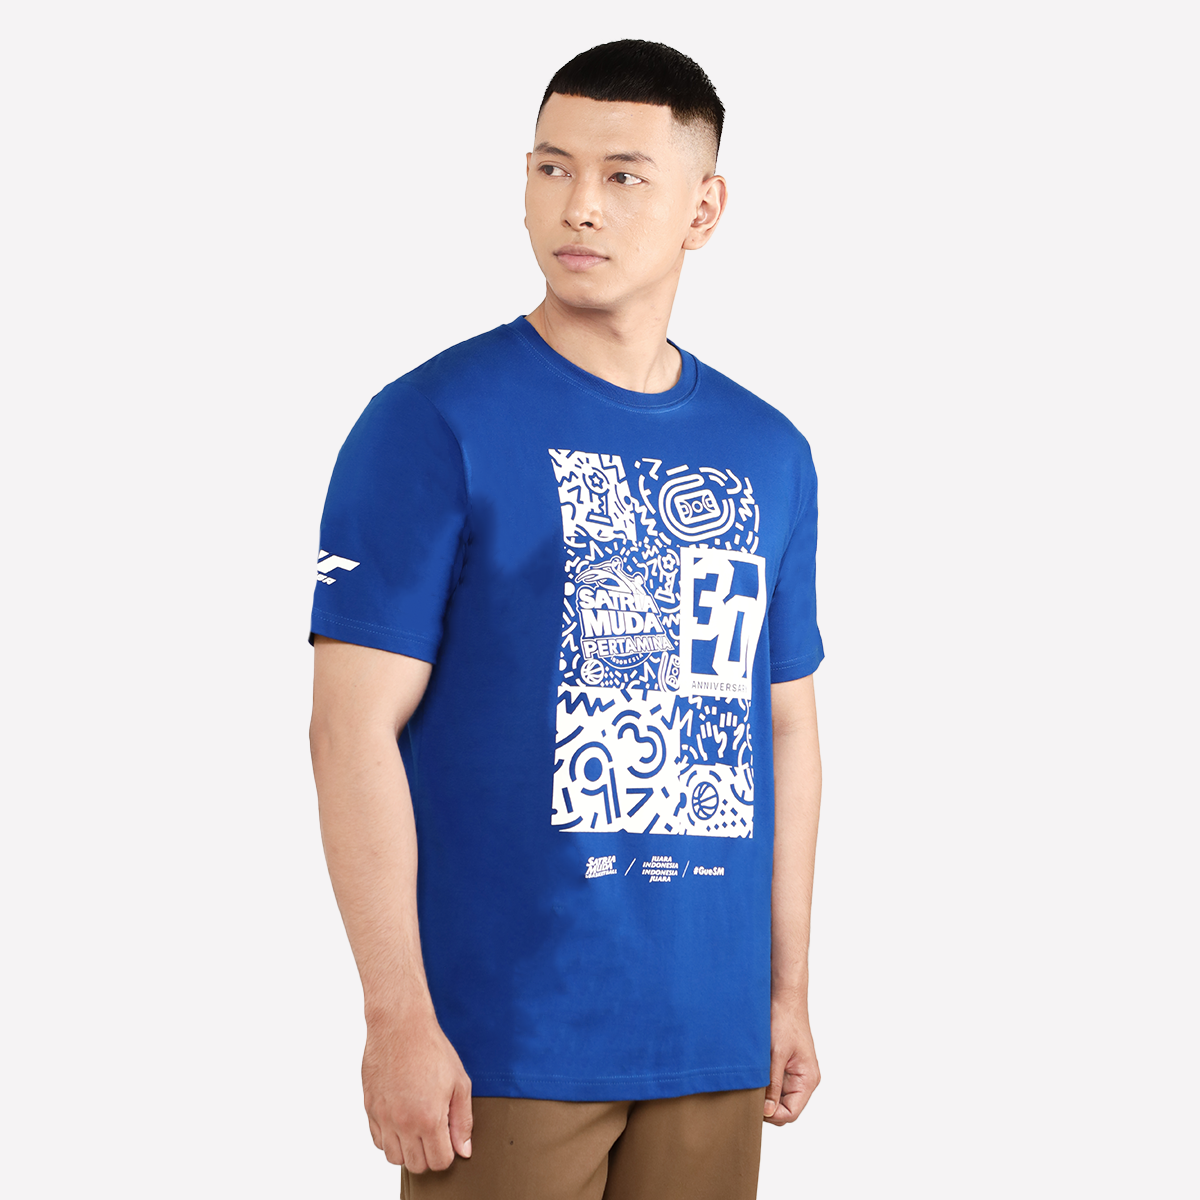 Juaraga Satria Muda T-Shirt C - 30th Anniversary - Biru